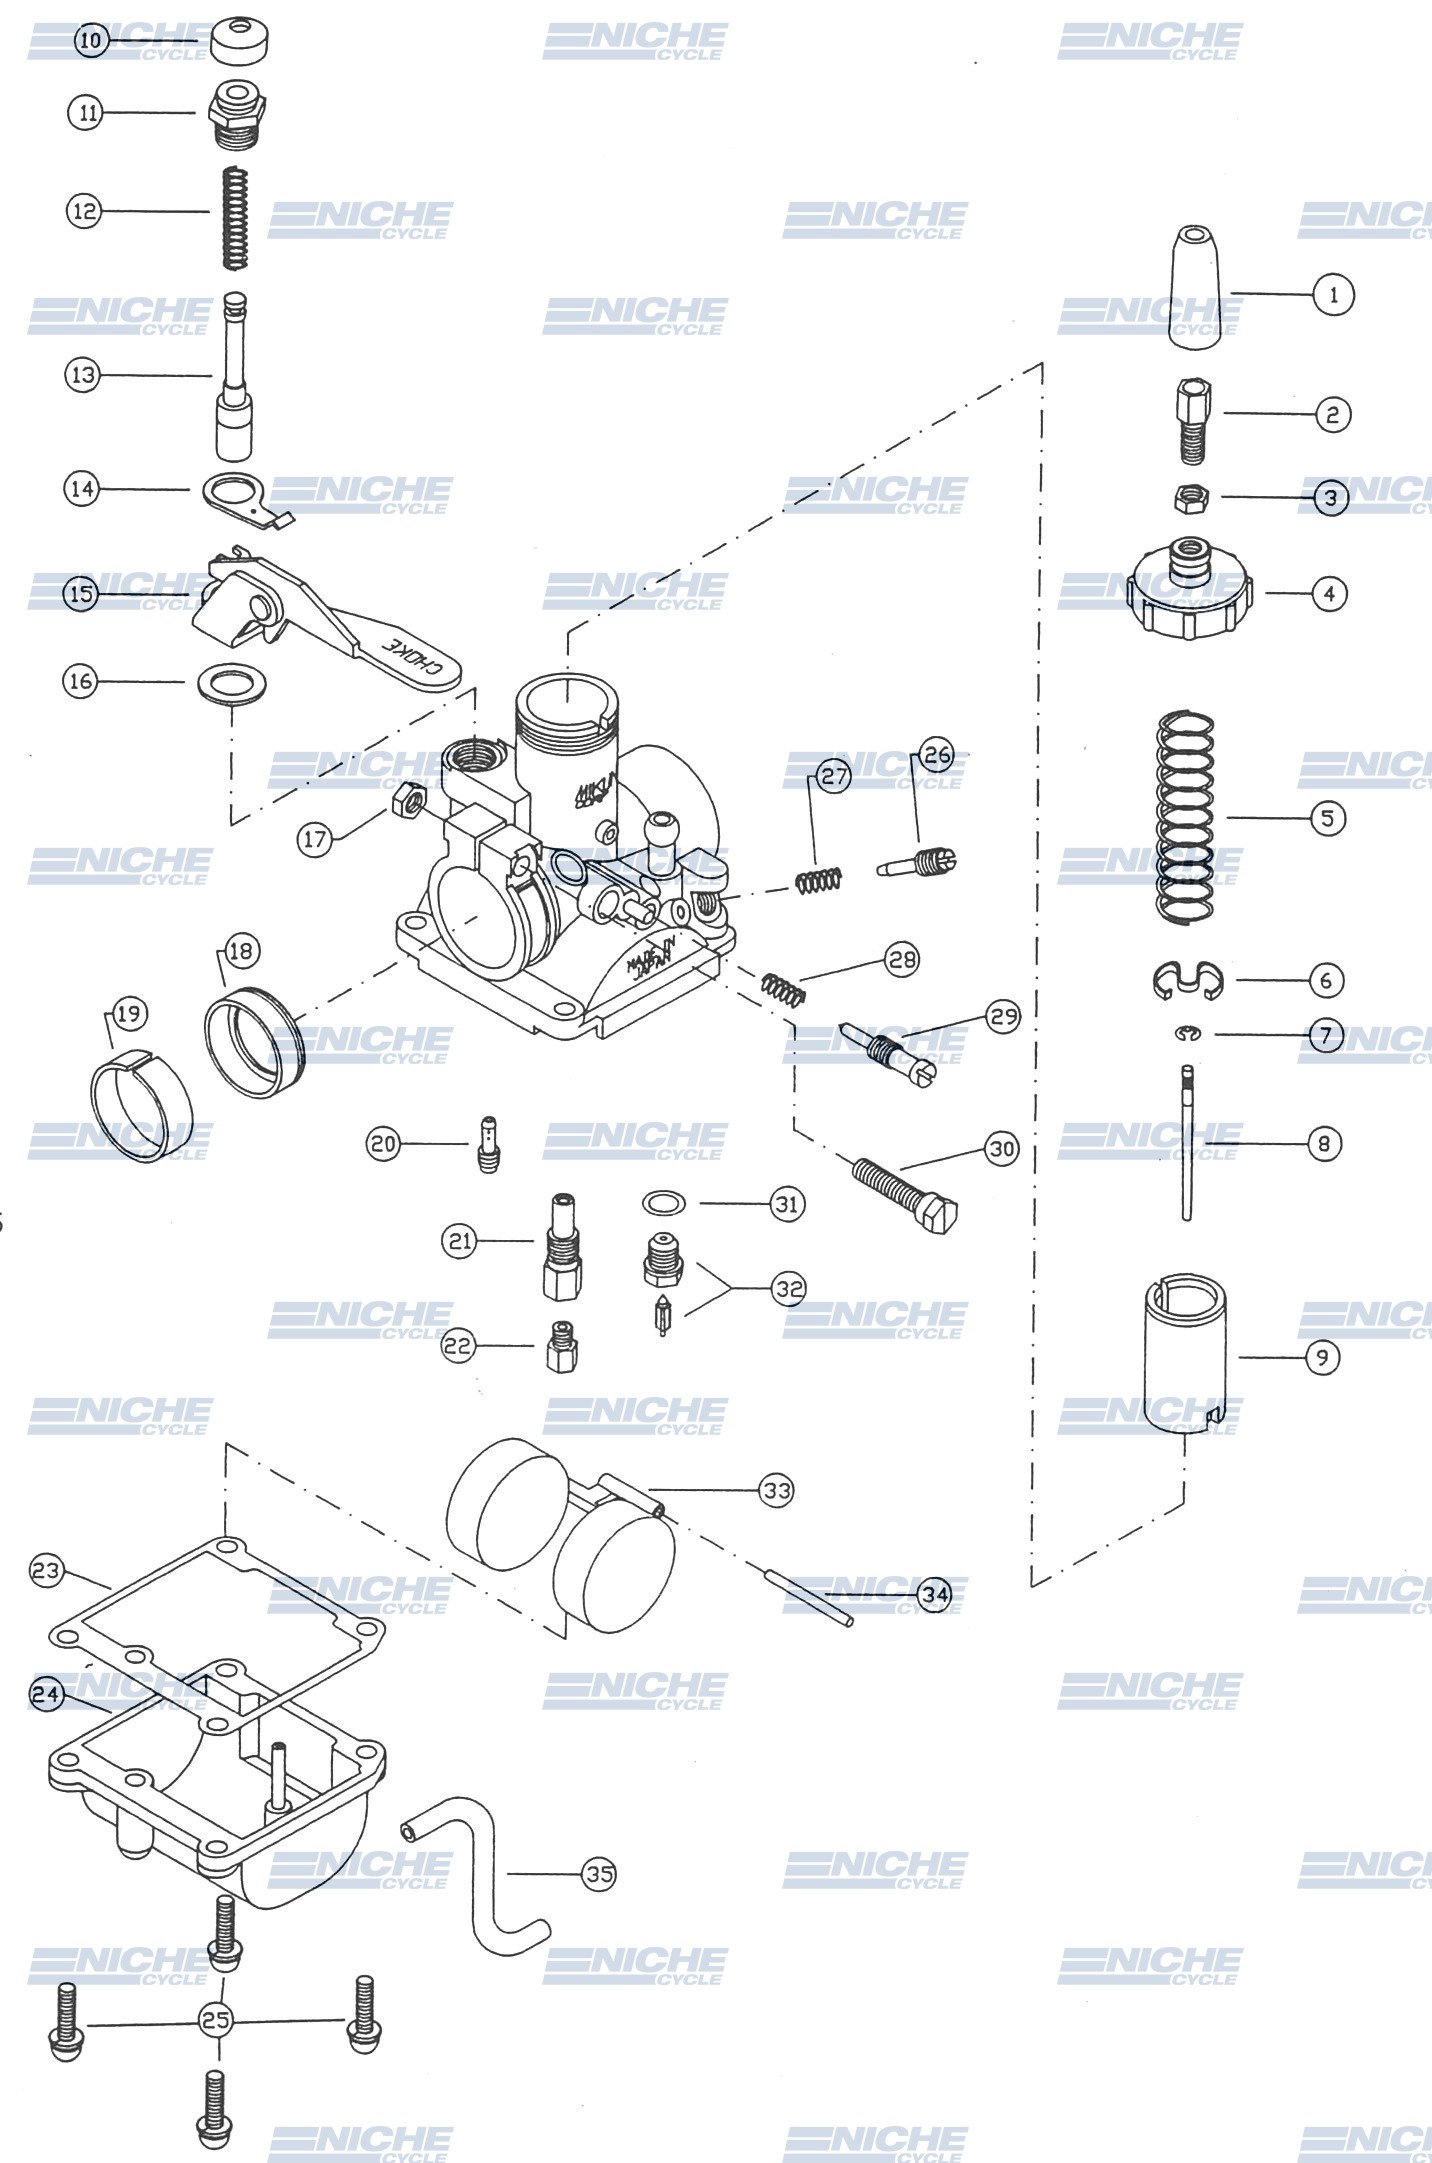 Mikuni VM18-144 Exploded View - Replacement Parts Listing VM18-144_parts_list